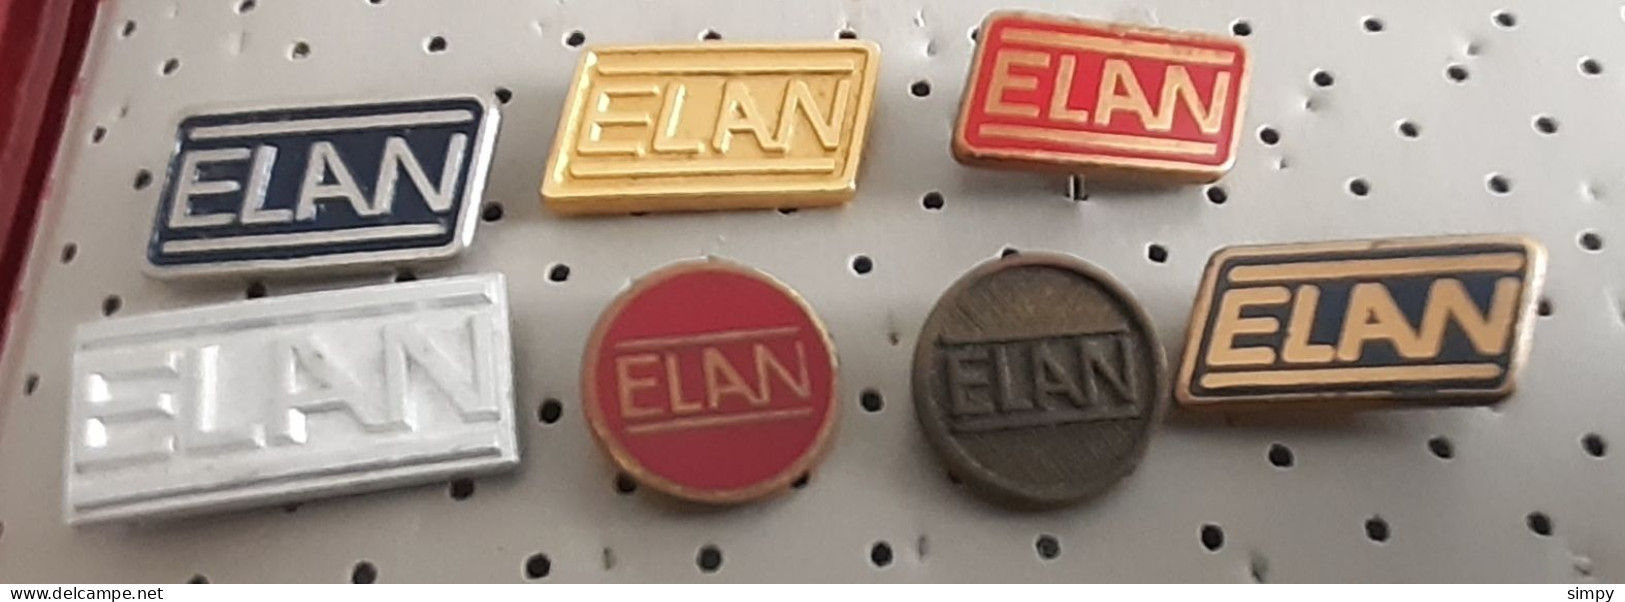 ELAN Begunje Factory For Skis, Bicycles, Boats, Skiing Slovenia Ex Yugoslavia Pins - Trademarks